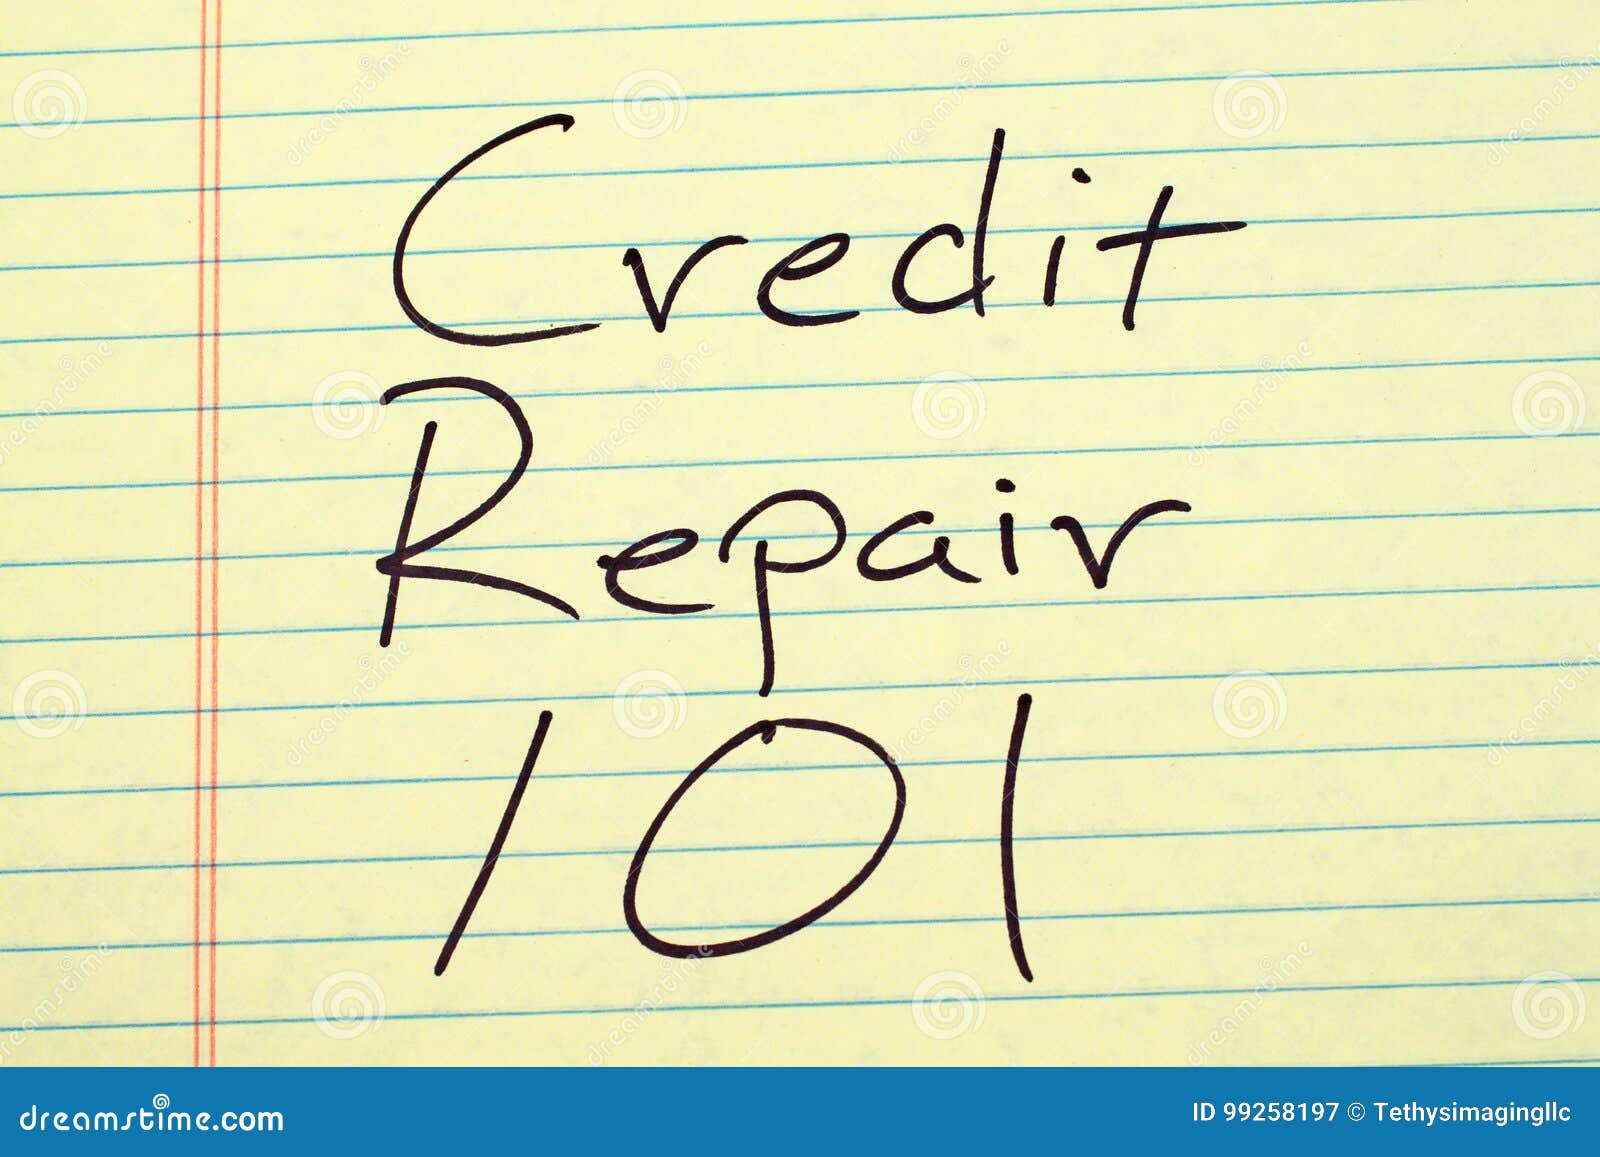 credit repair 101 on a yellow legal pad